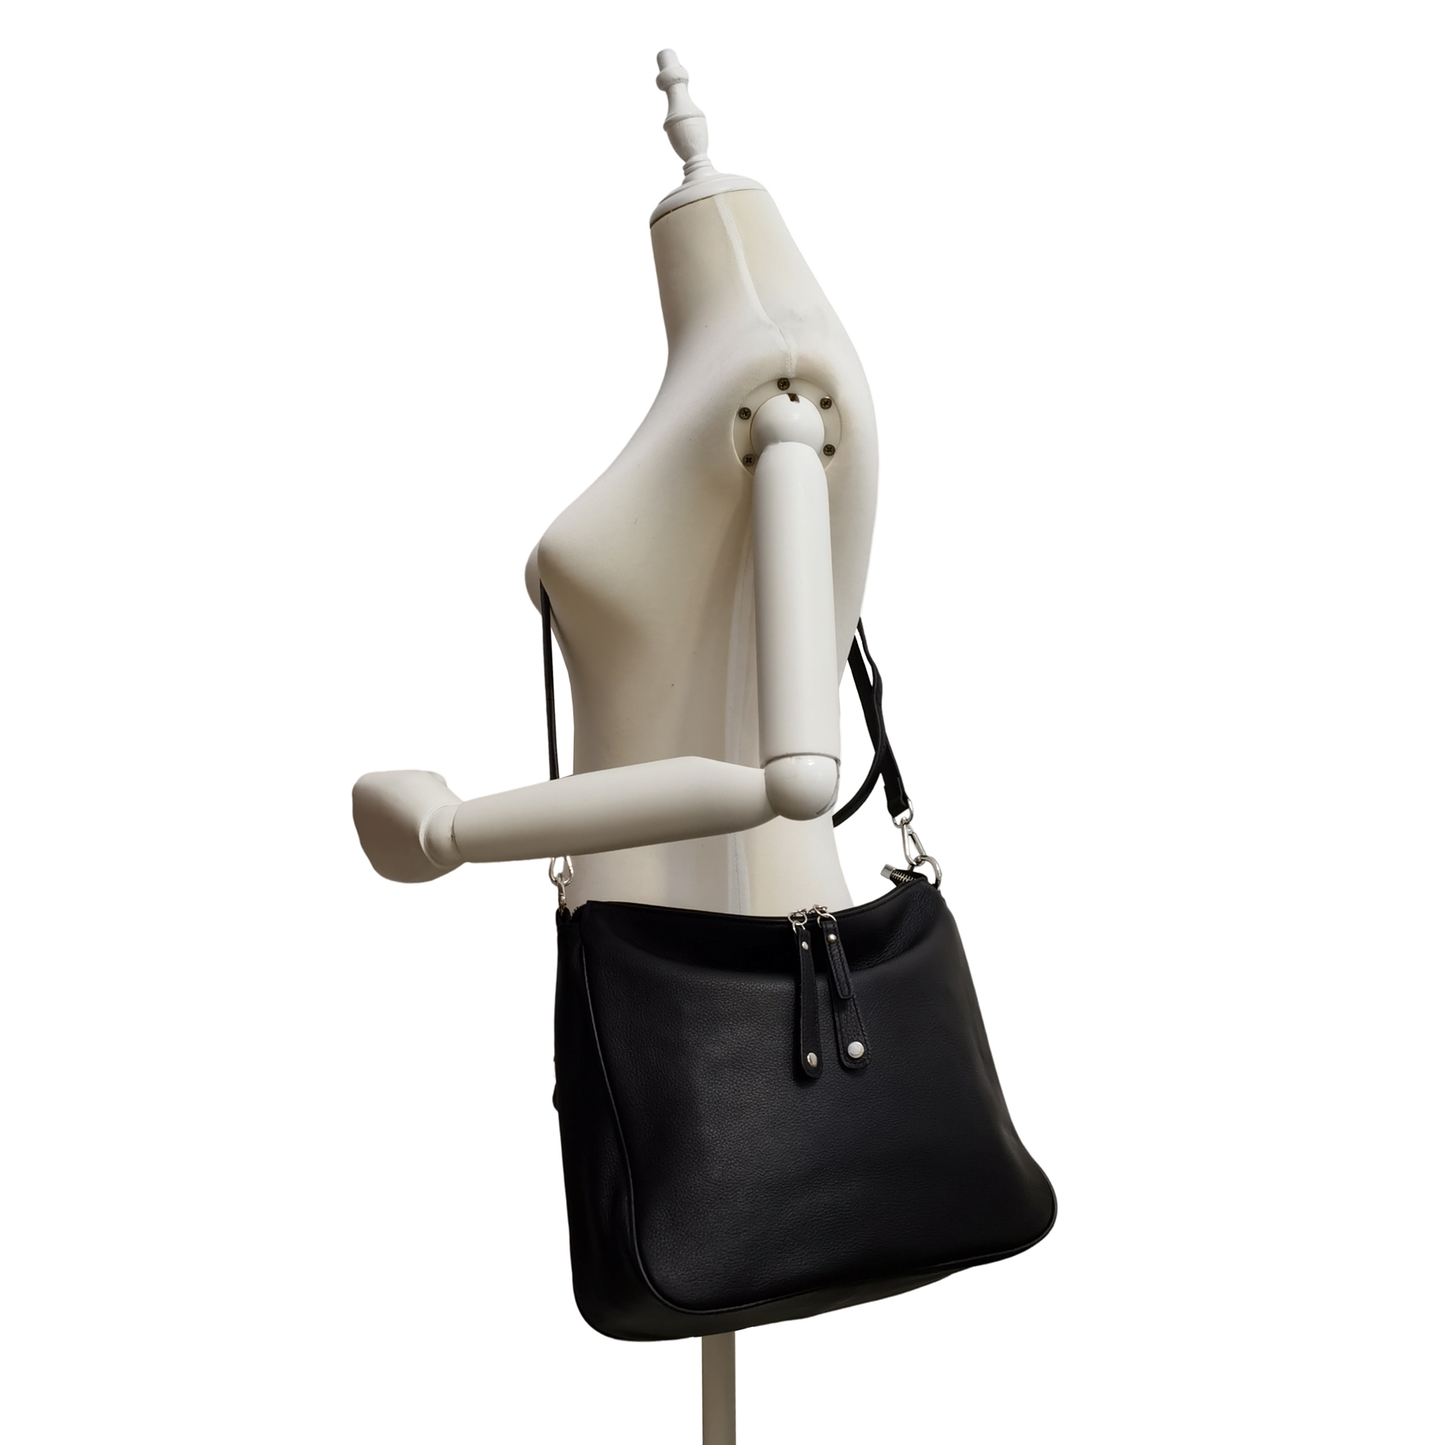 Women's genuine cowhide leather handbag Bora Chain design (chain removable upon request)